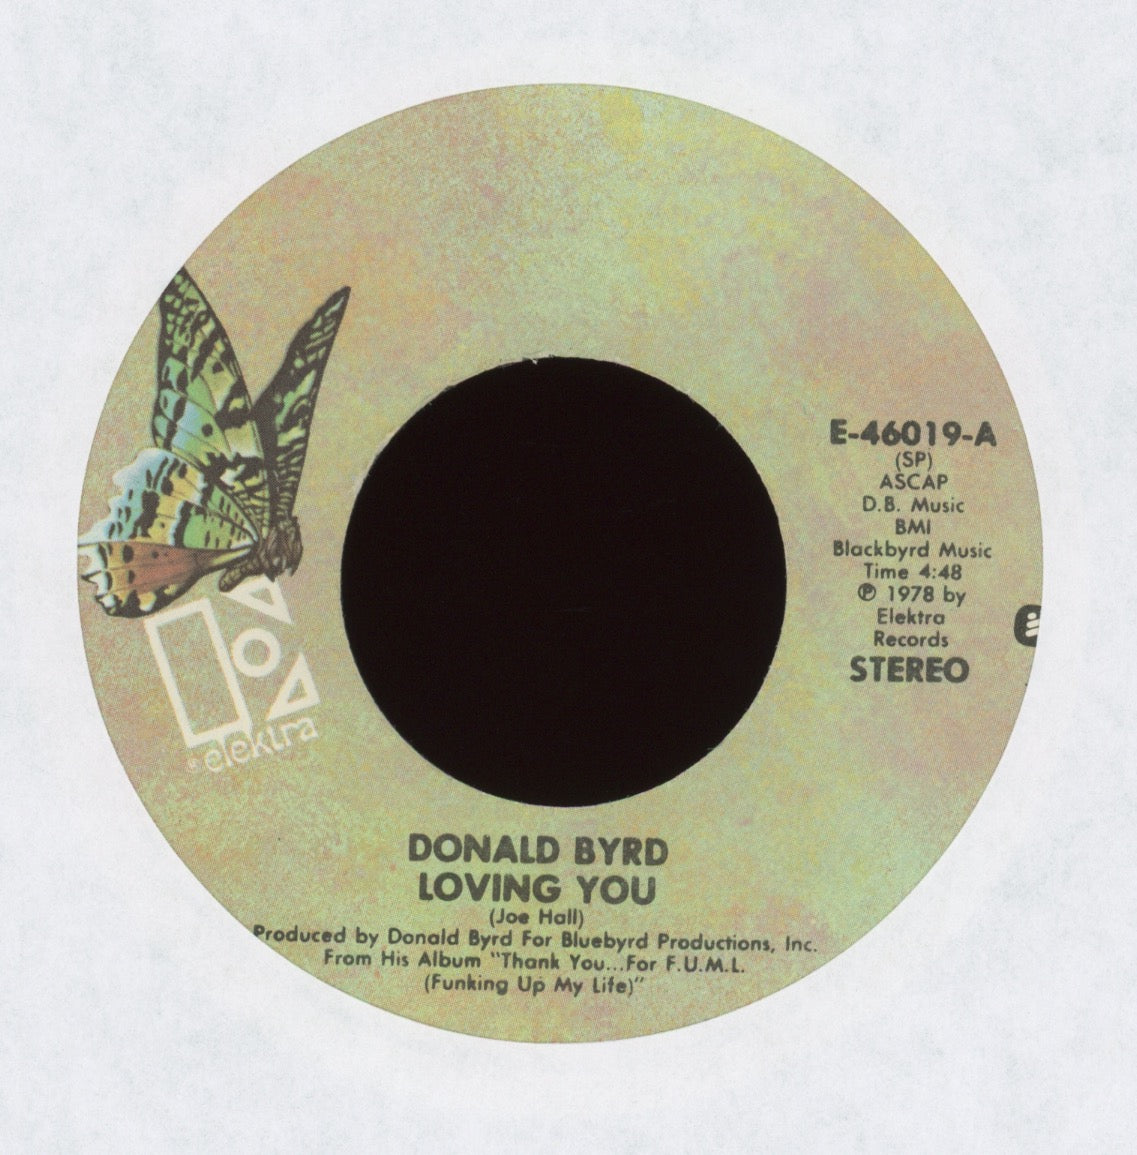 Donald Byrd - Loving You on Elektra